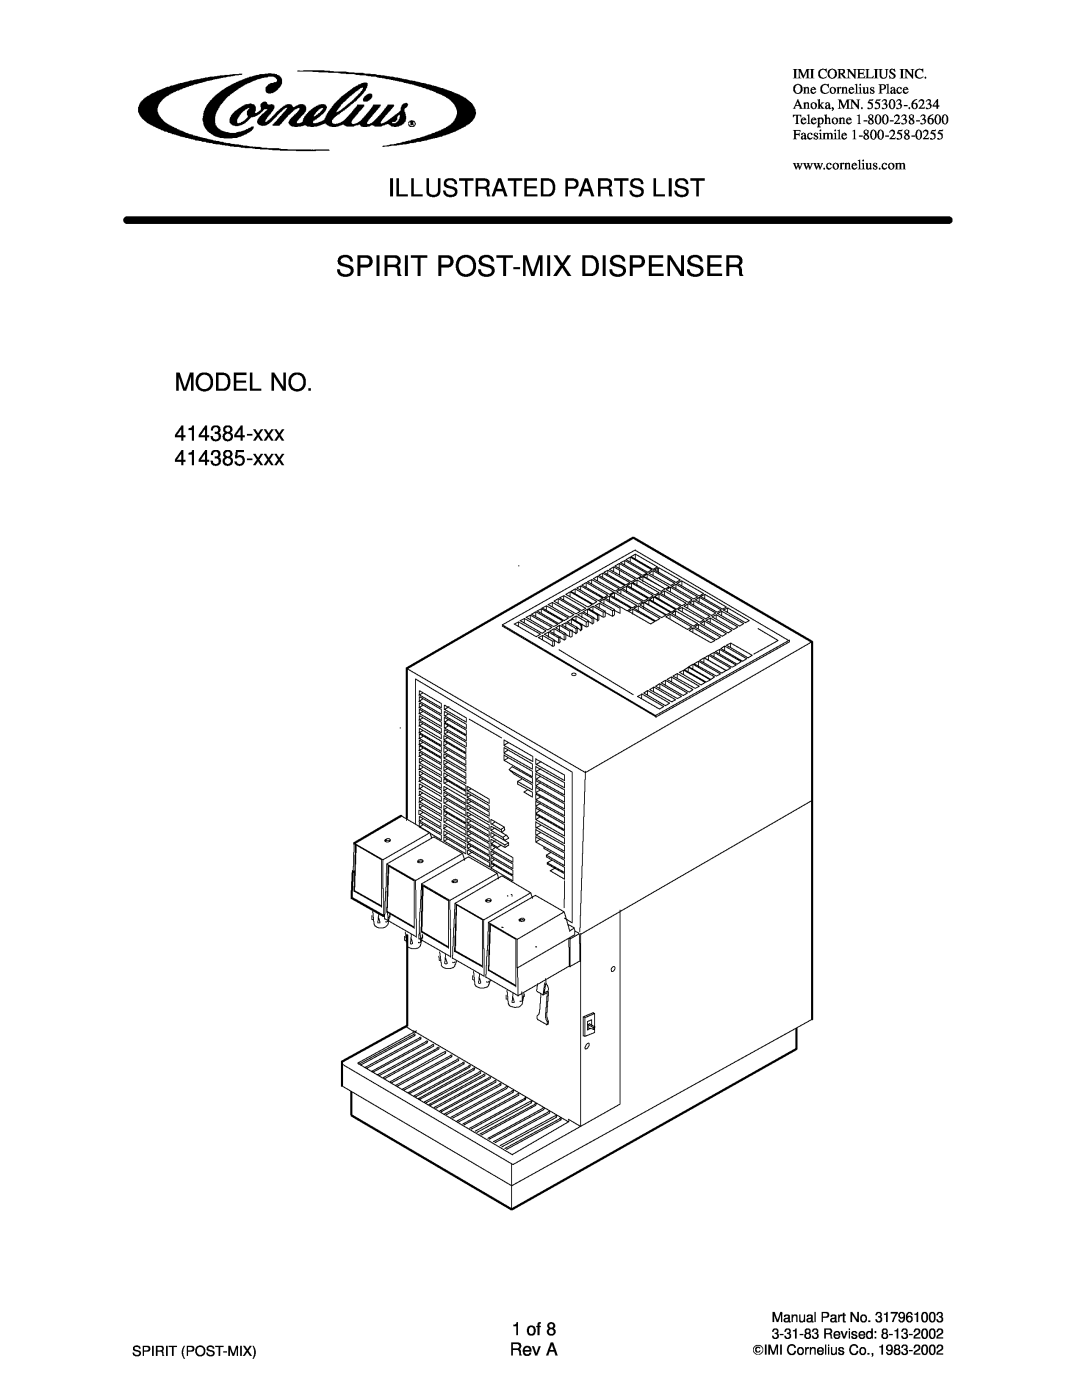 Cornelius 414385-XXX manual Spirit Post-Mix Dispenser, Illustrated Parts List, Model No, 1 of, Rev A, 414384-xxx 